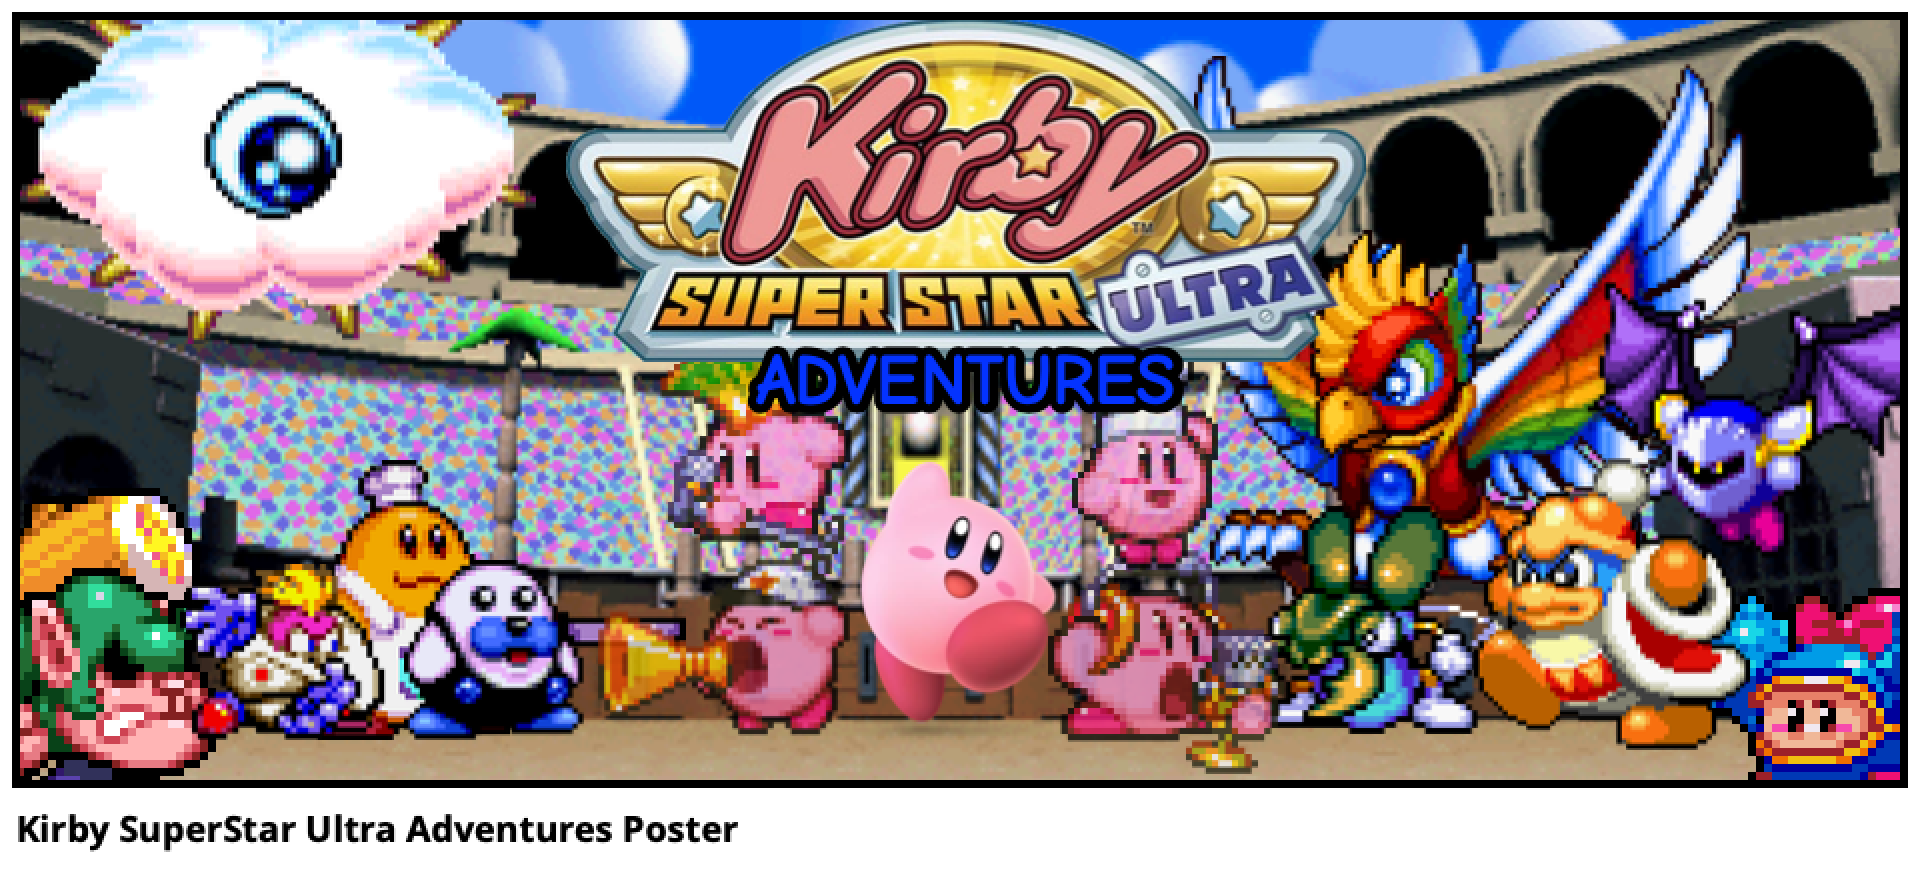 Kirby SuperStar Ultra Adventures Poster